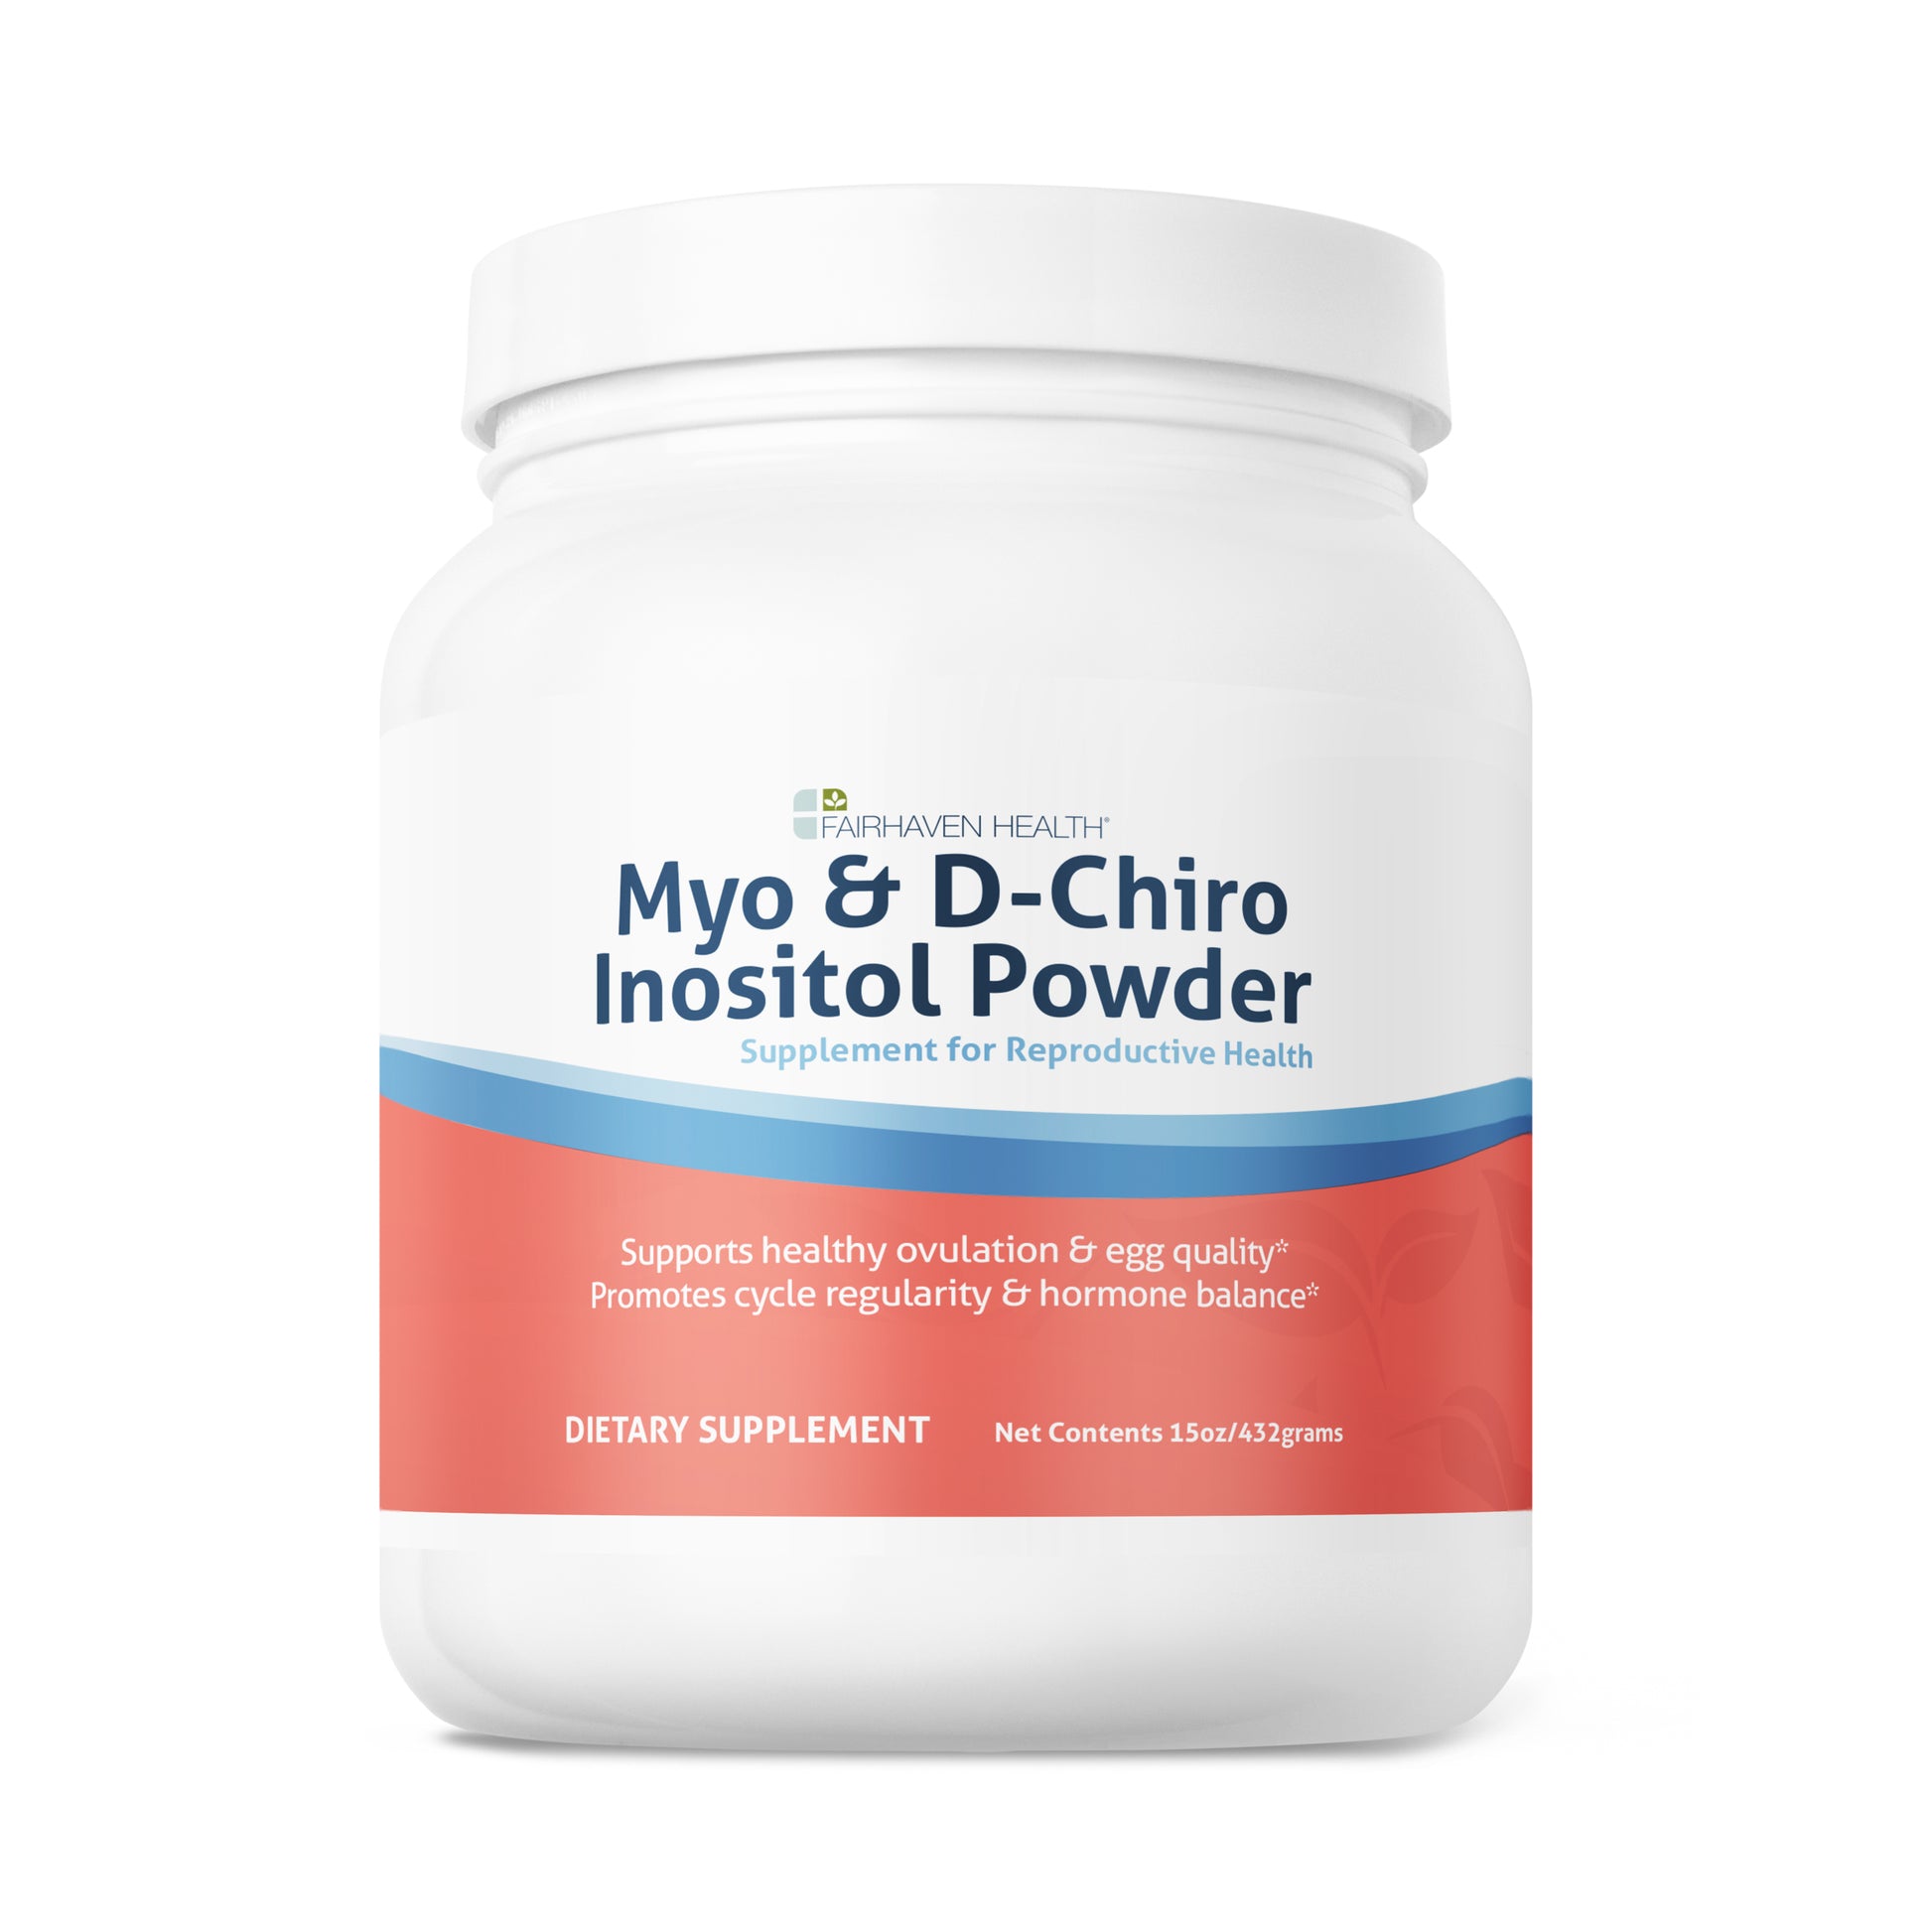 Fairhaven Health Myo + D-Chiro Inositol Powder